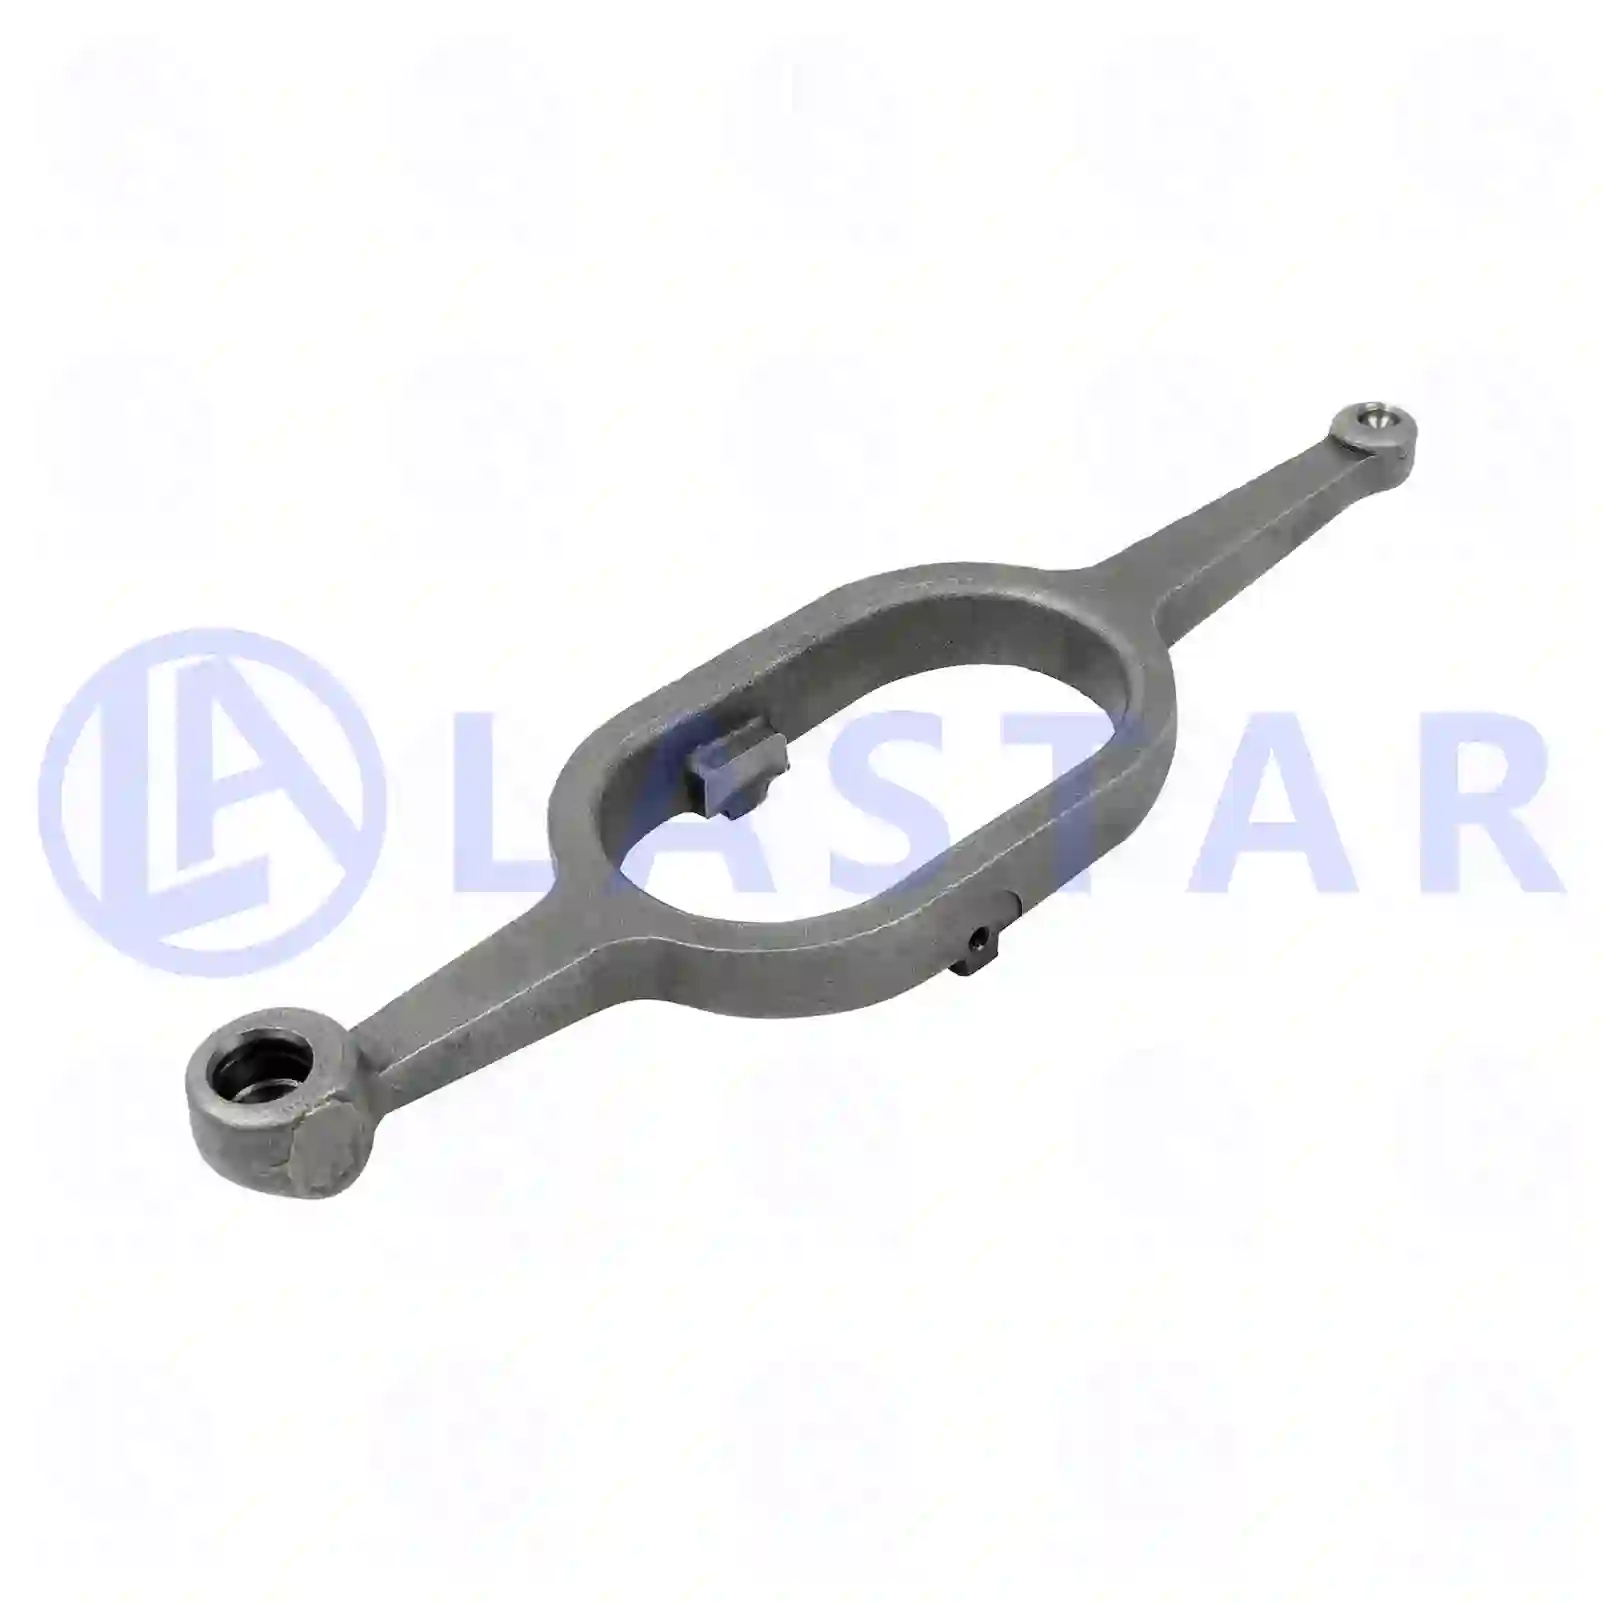  Release lever || Lastar Spare Part | Truck Spare Parts, Auotomotive Spare Parts